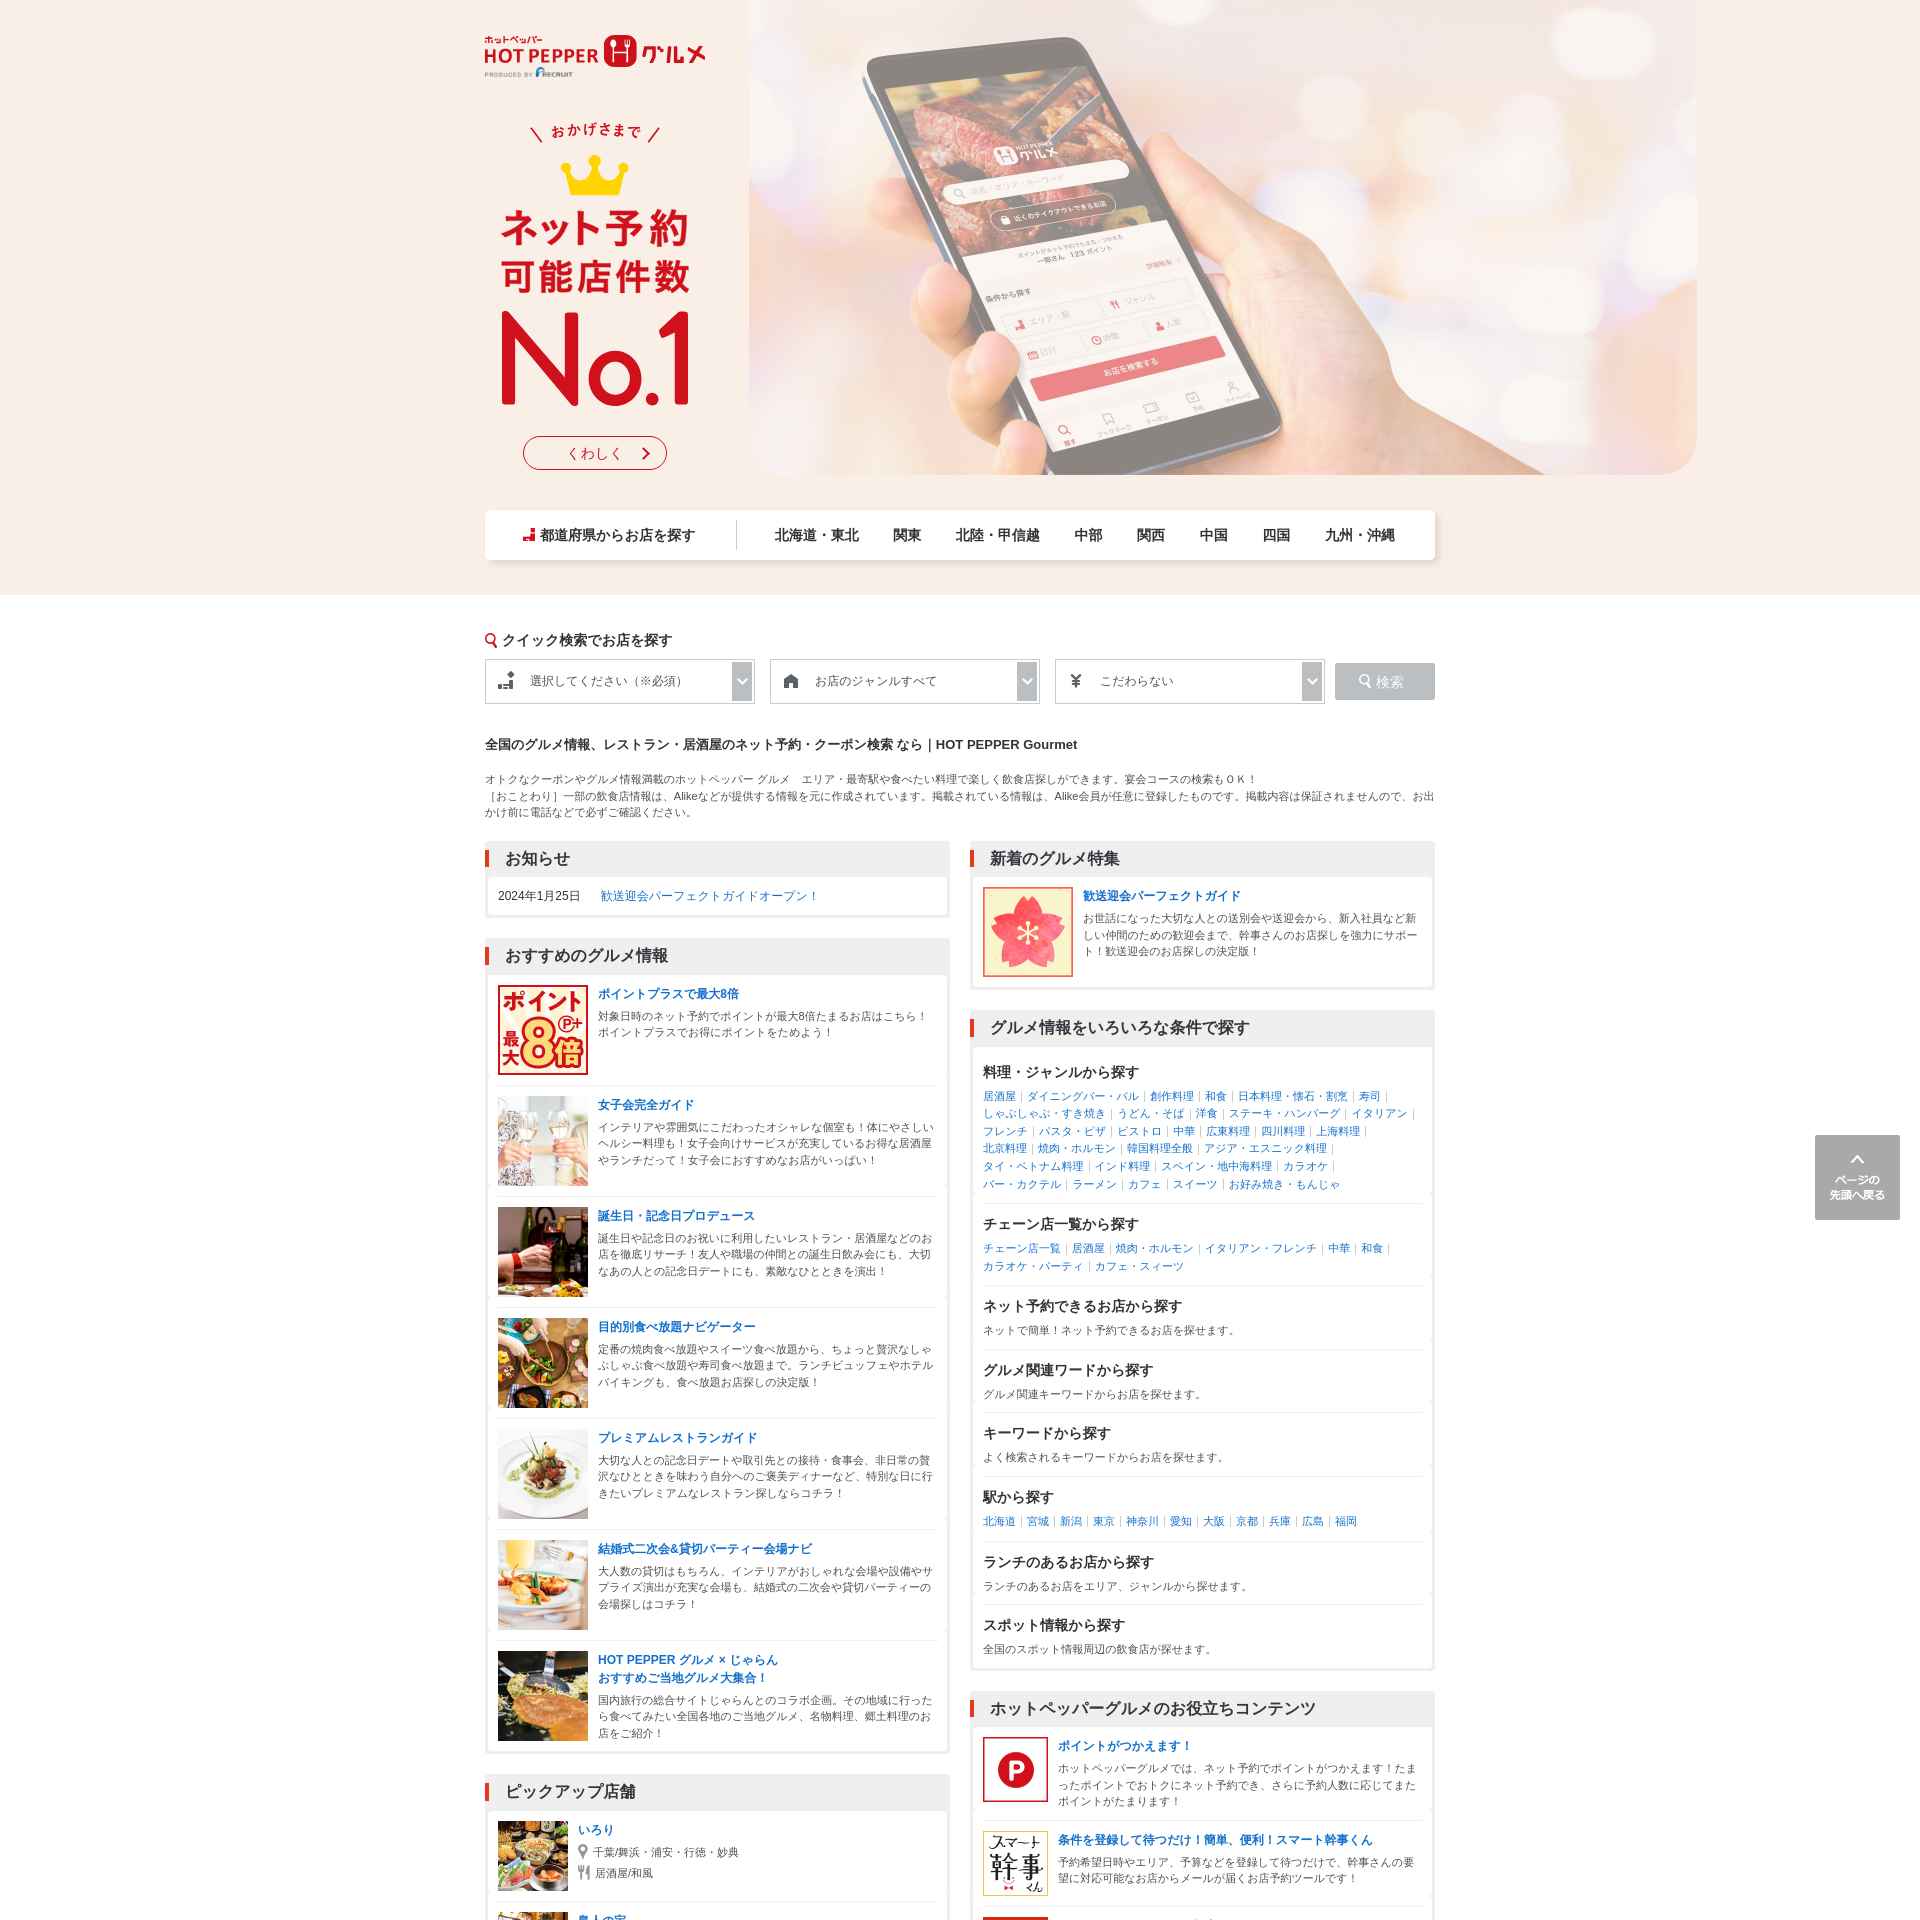 Hot Pepper JP: Japan’s Go-to Website for Food Lovers